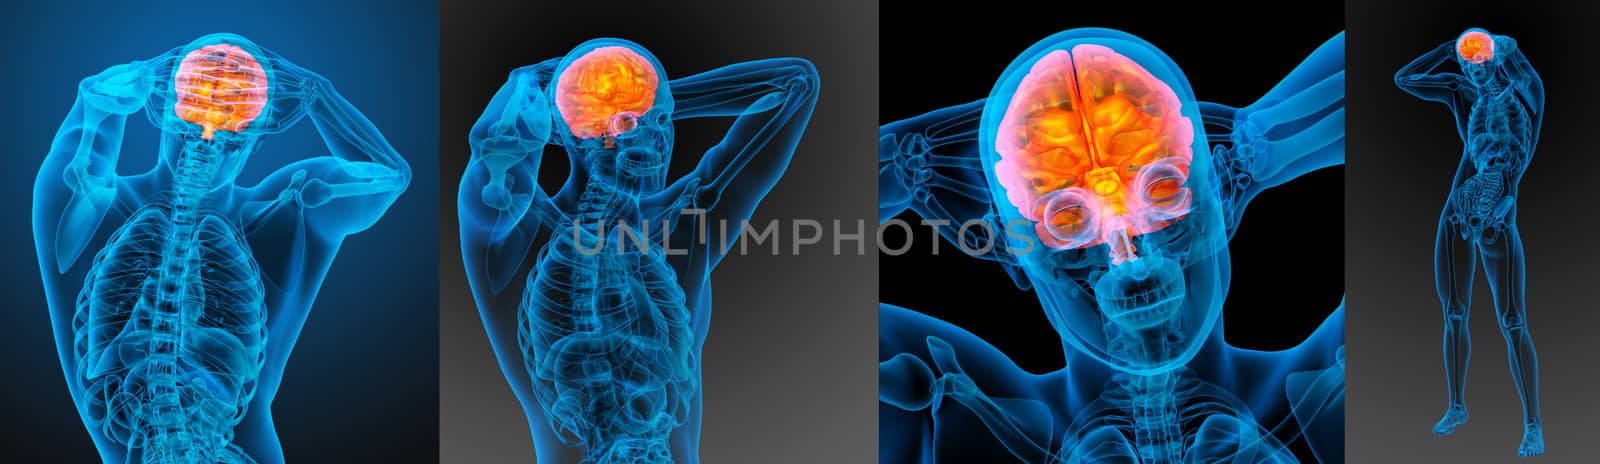 3d rendering medical illustration of the human brain